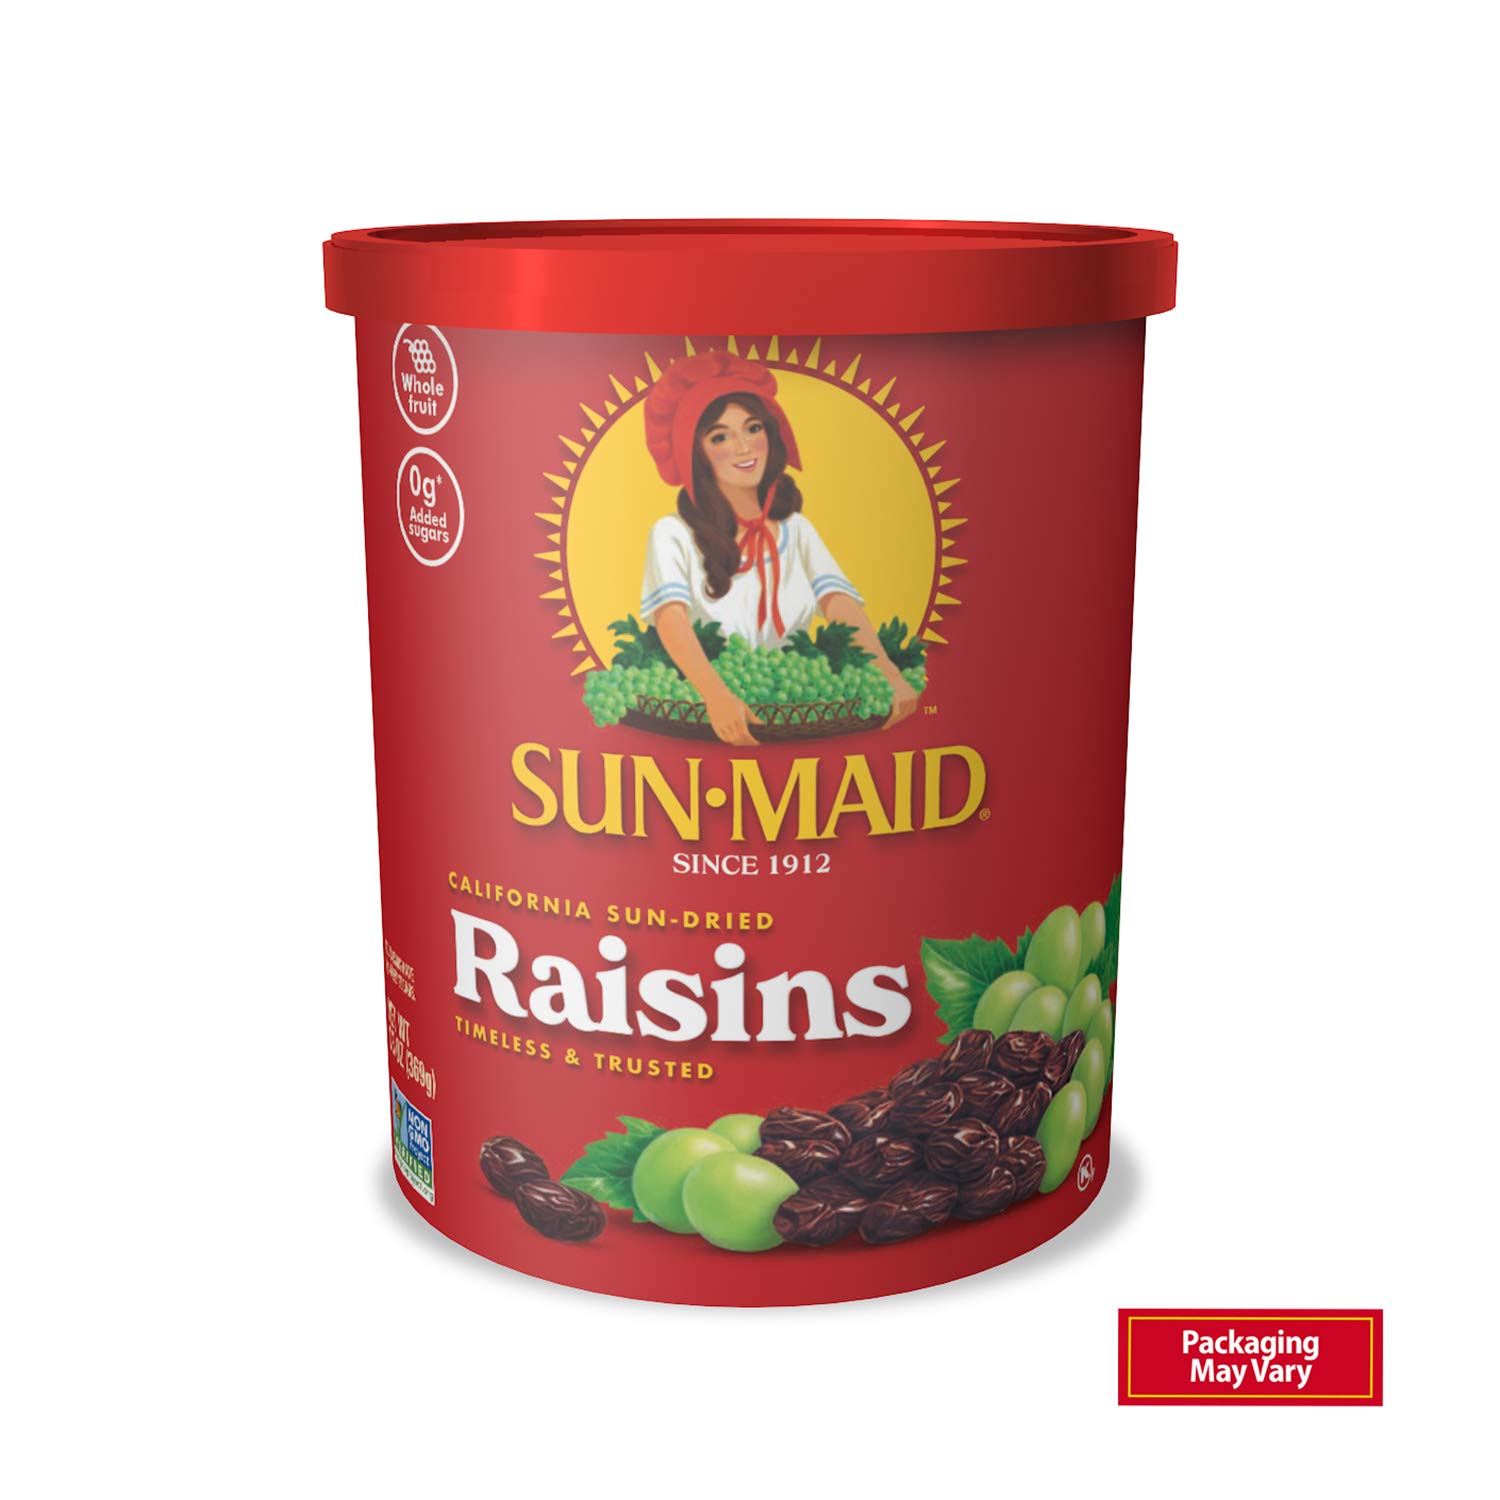 13-Oz Sun-Maid California Sun-Dried Raisins $2.80 w/ S&S + Free Shipping w/ Prime or on $35+